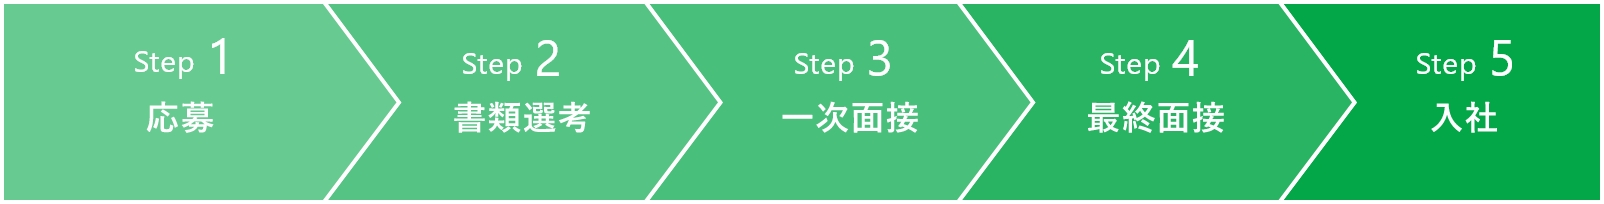 Step 1 応募 Step 2 書類選考 Step 3 一次面接 Step 4 最終面接 Step 5 入社